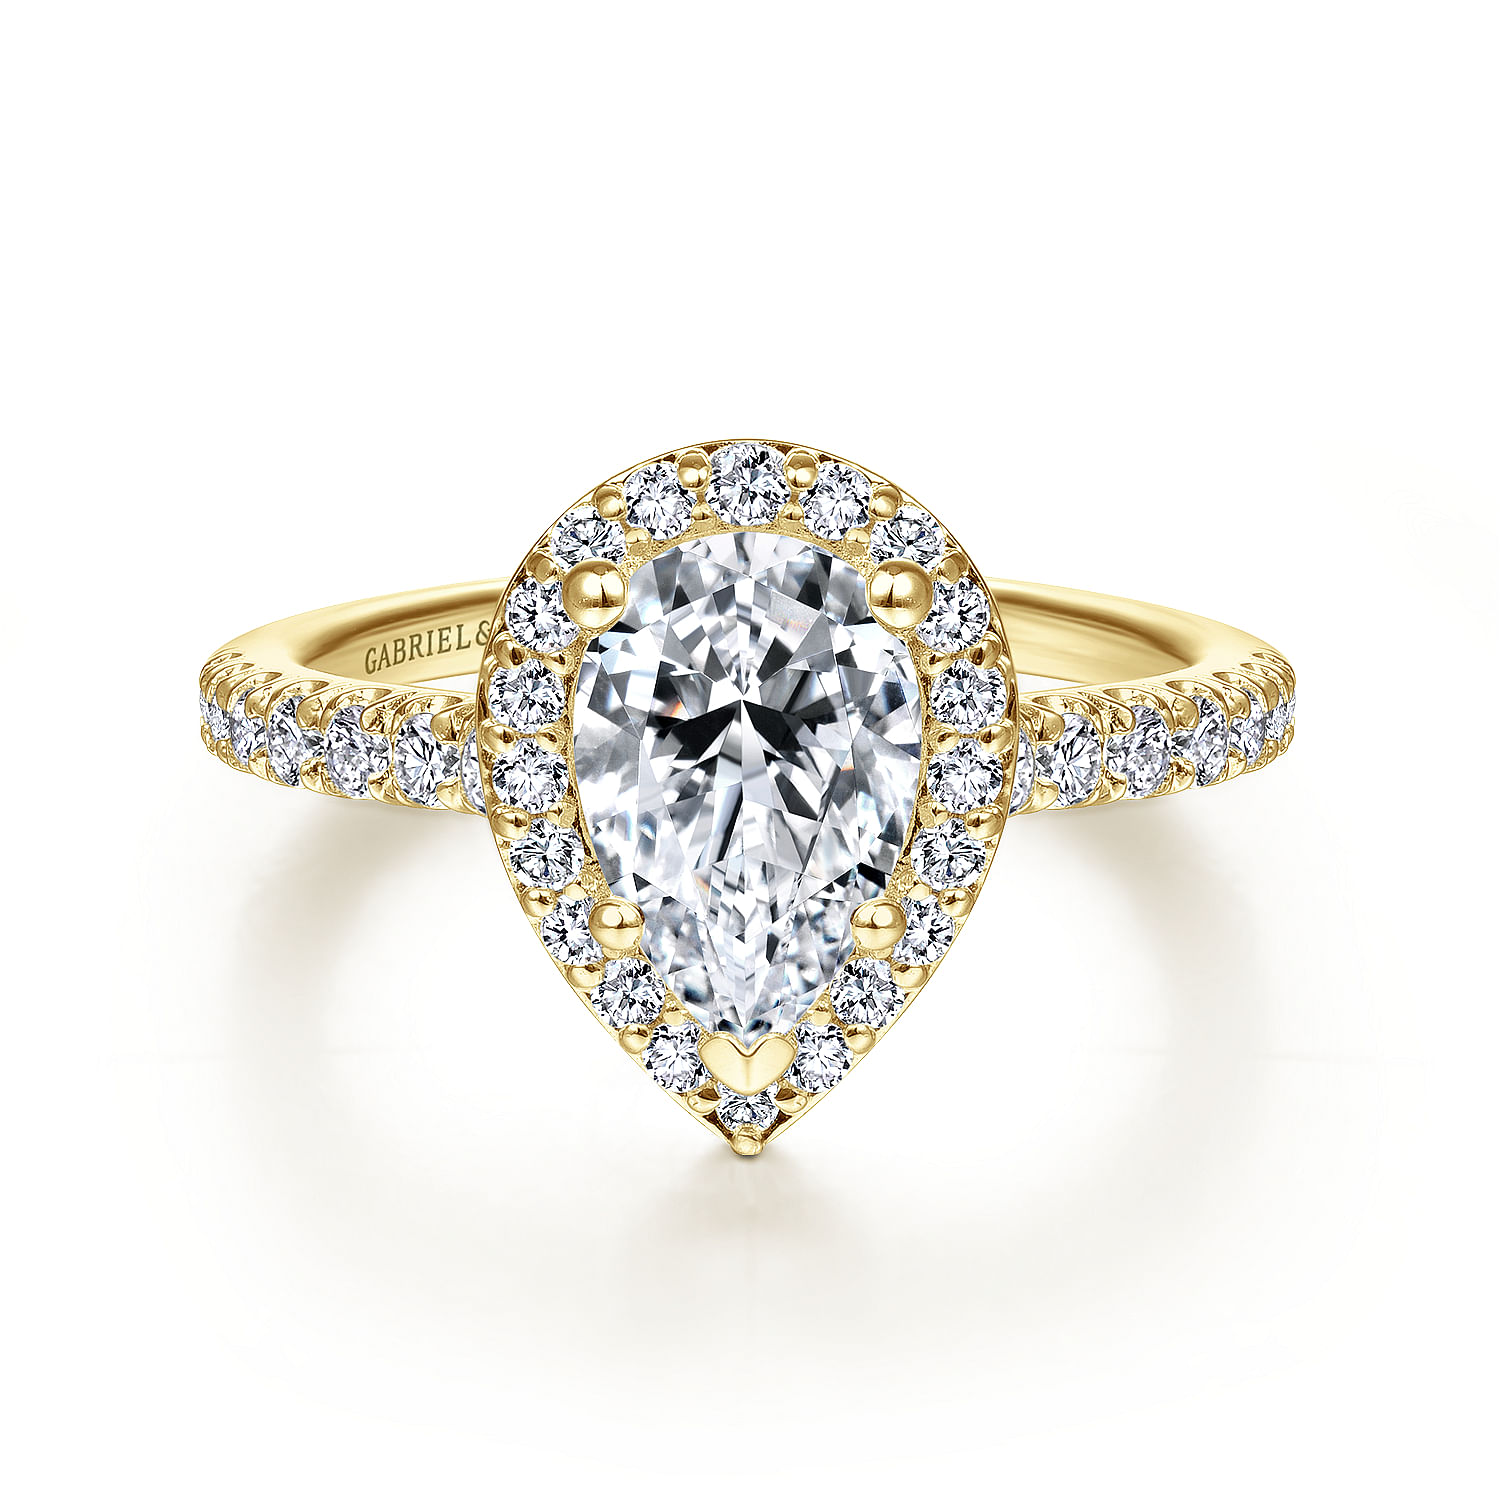 Lyla---14K-Yellow-Gold-Pear-Shape-Halo-Diamond-Engagement-Ring1